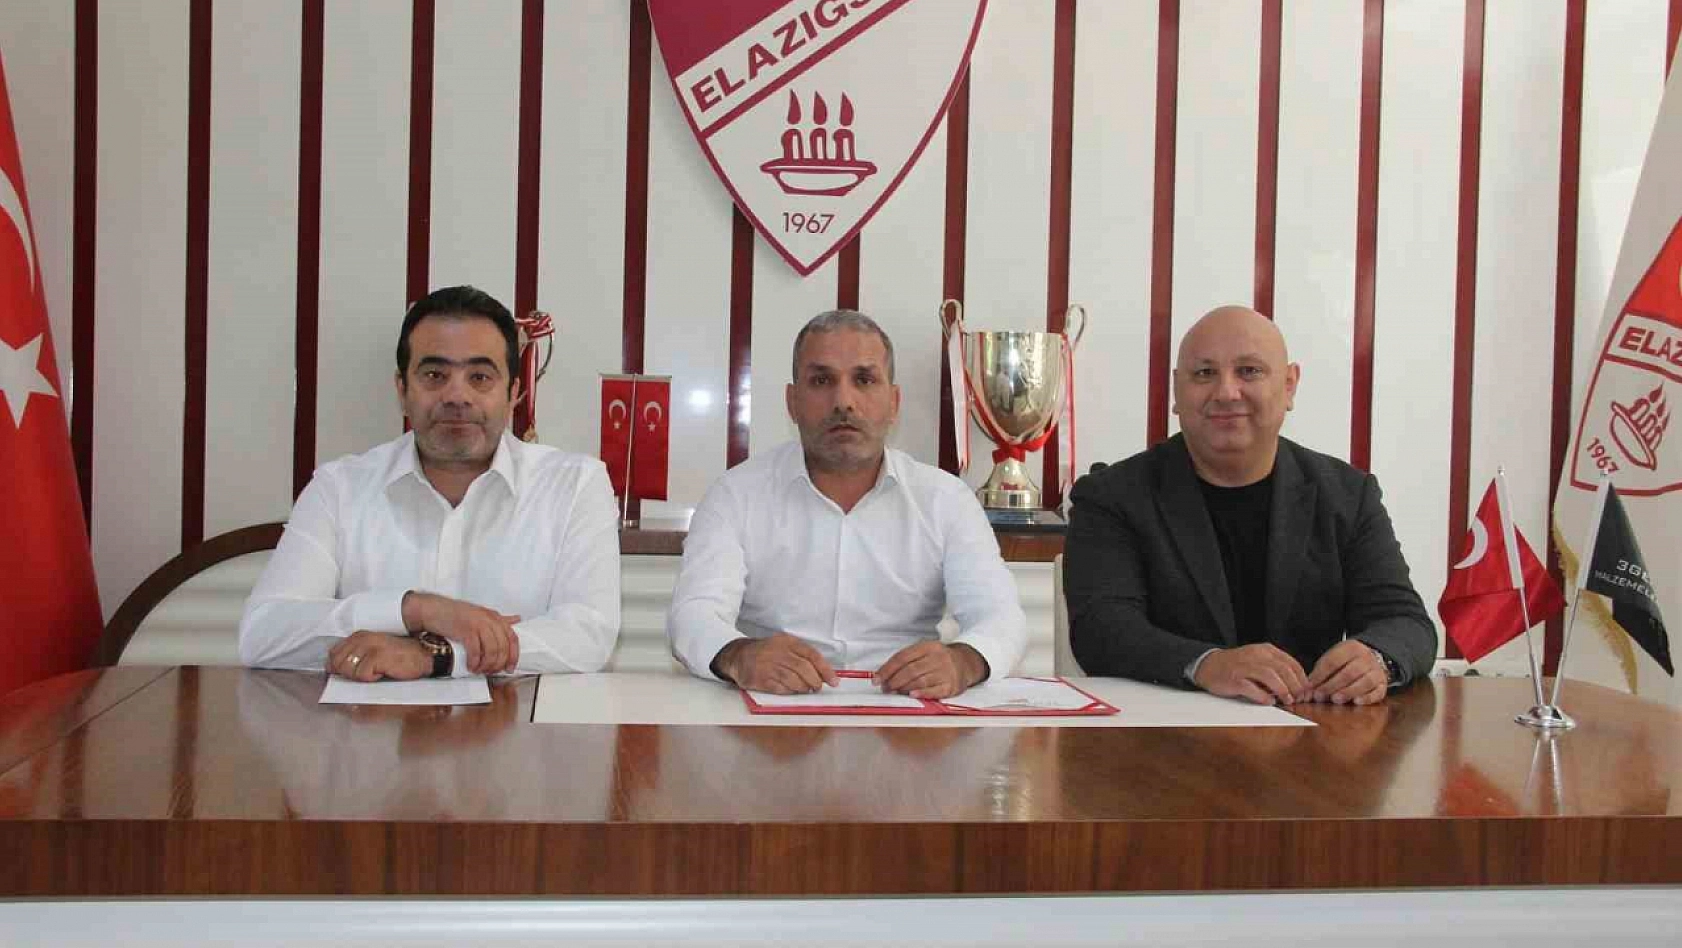 Elazığspor'a yeni isim sponsoru